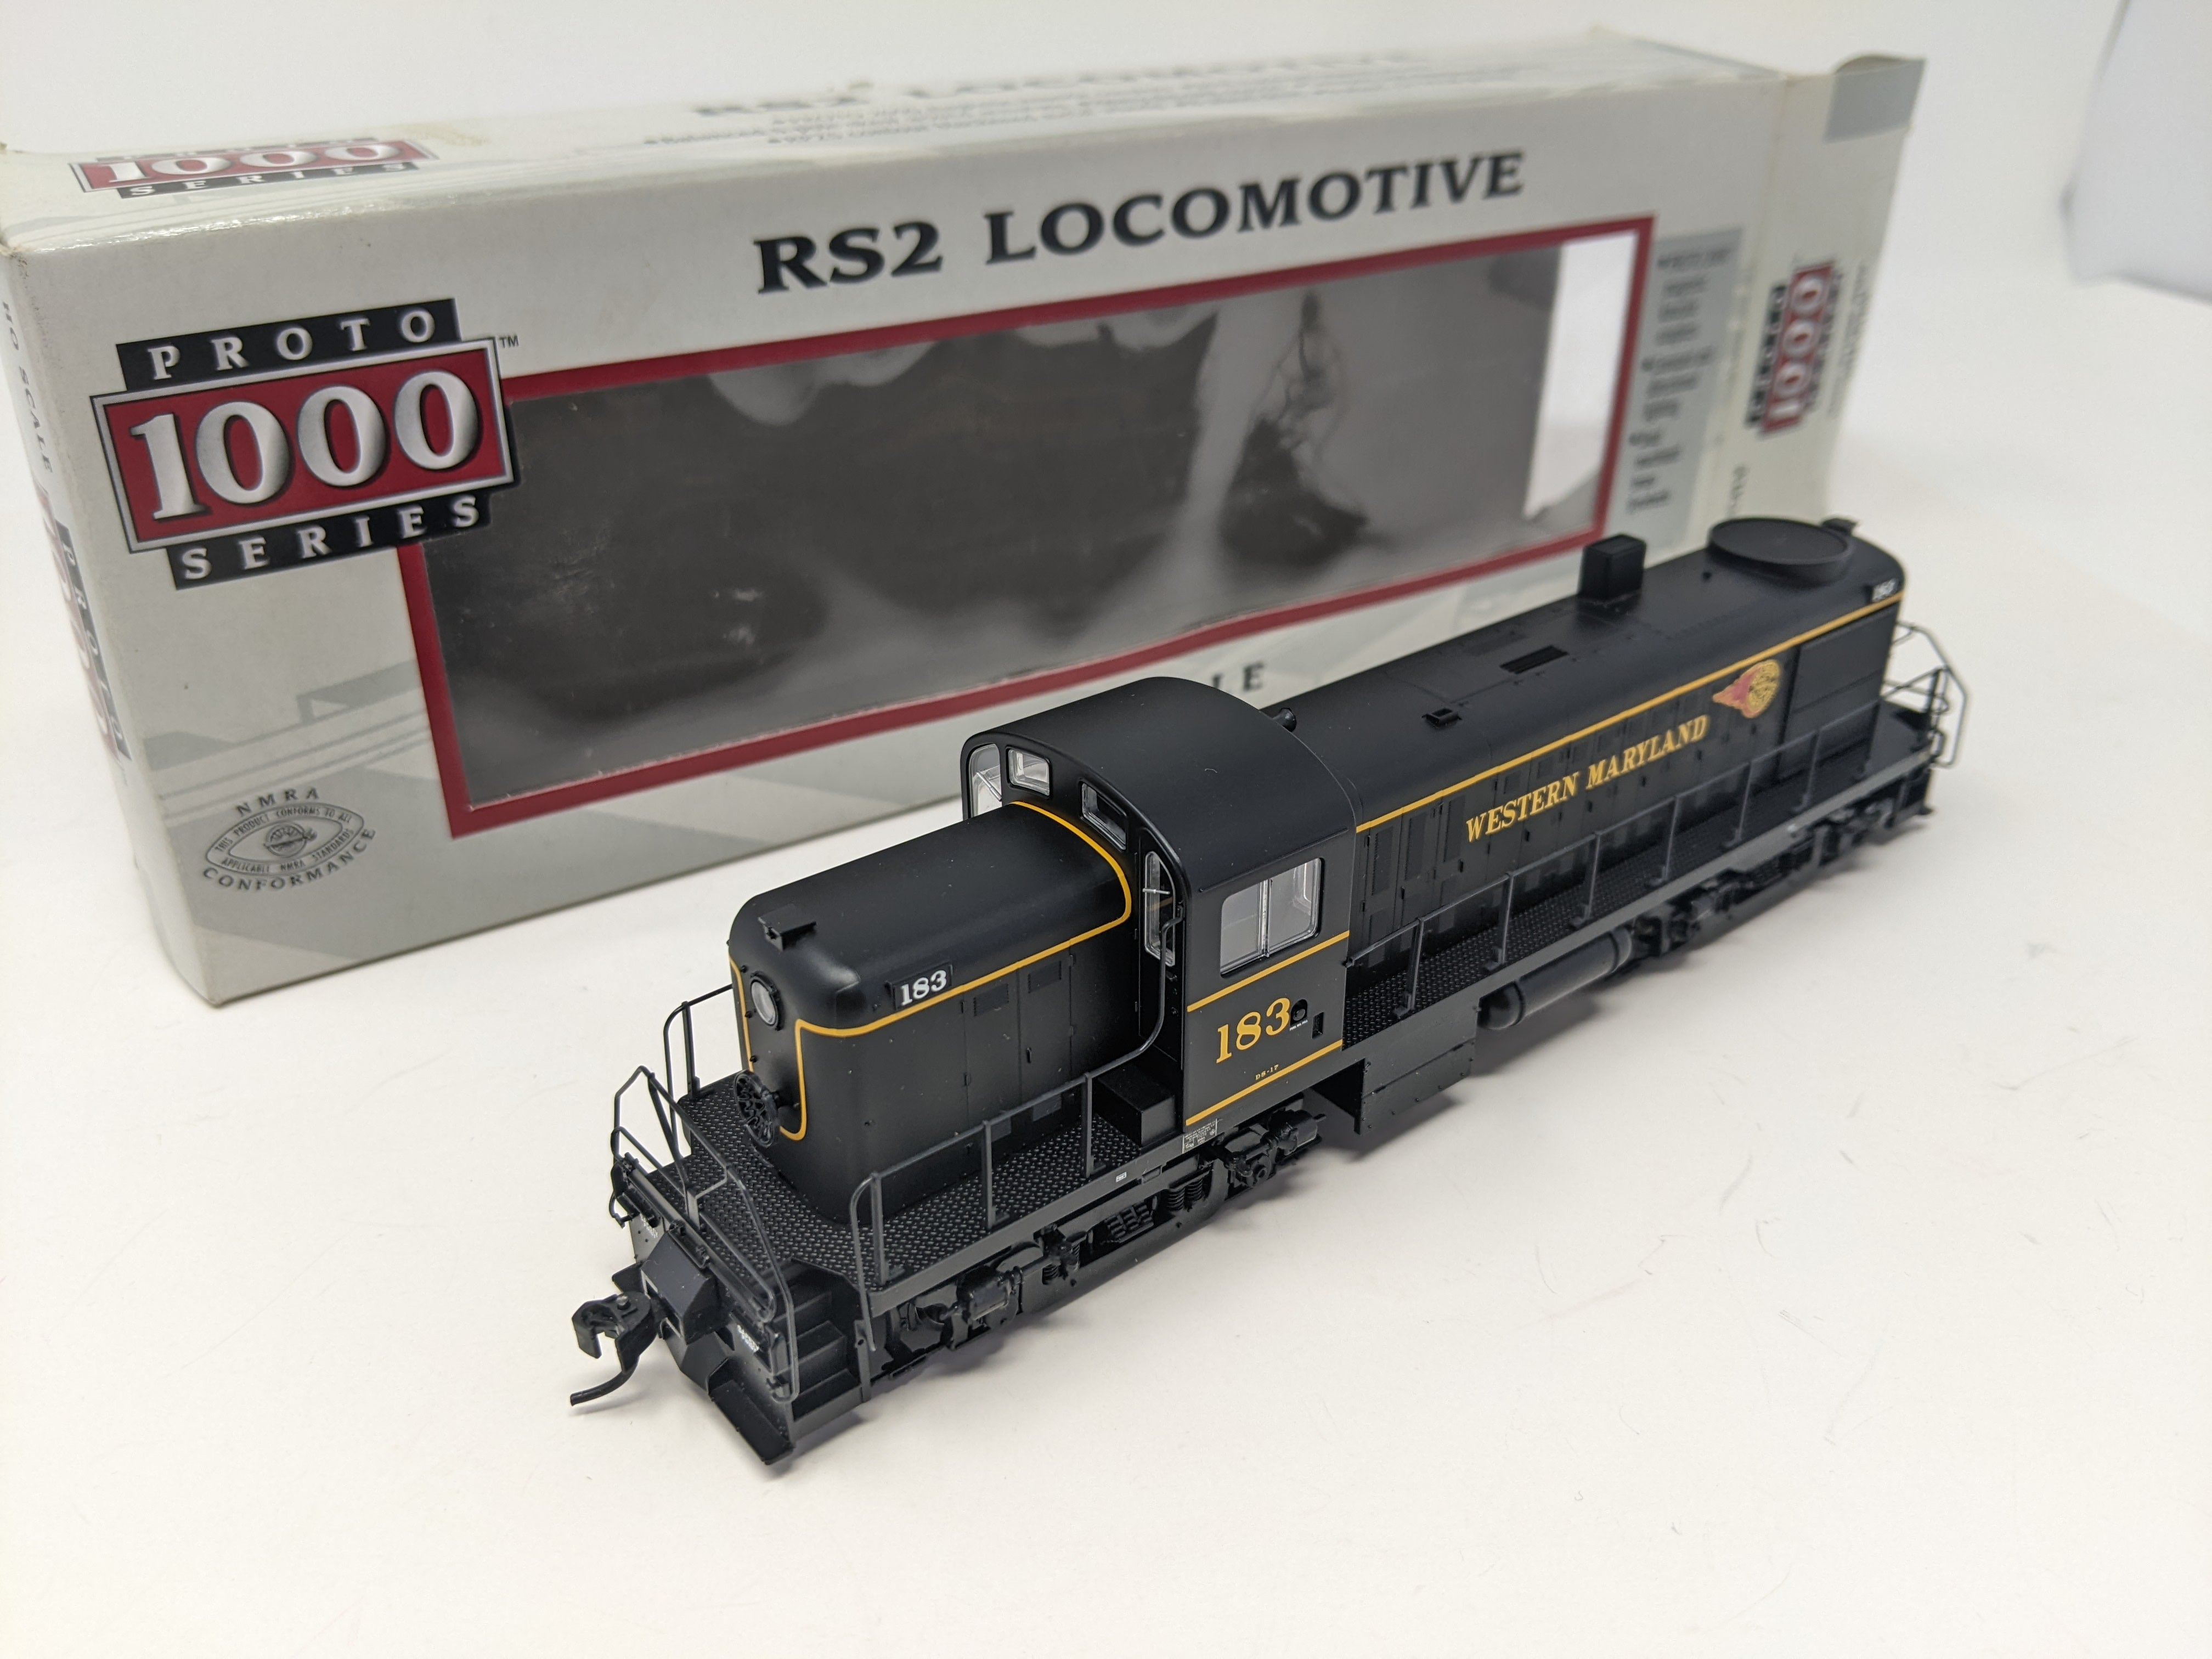 USED Life-Like 31286 HO Scale, Proto 1000 RS2 Diesel Locomotive, Western Maryland #183 (DC)